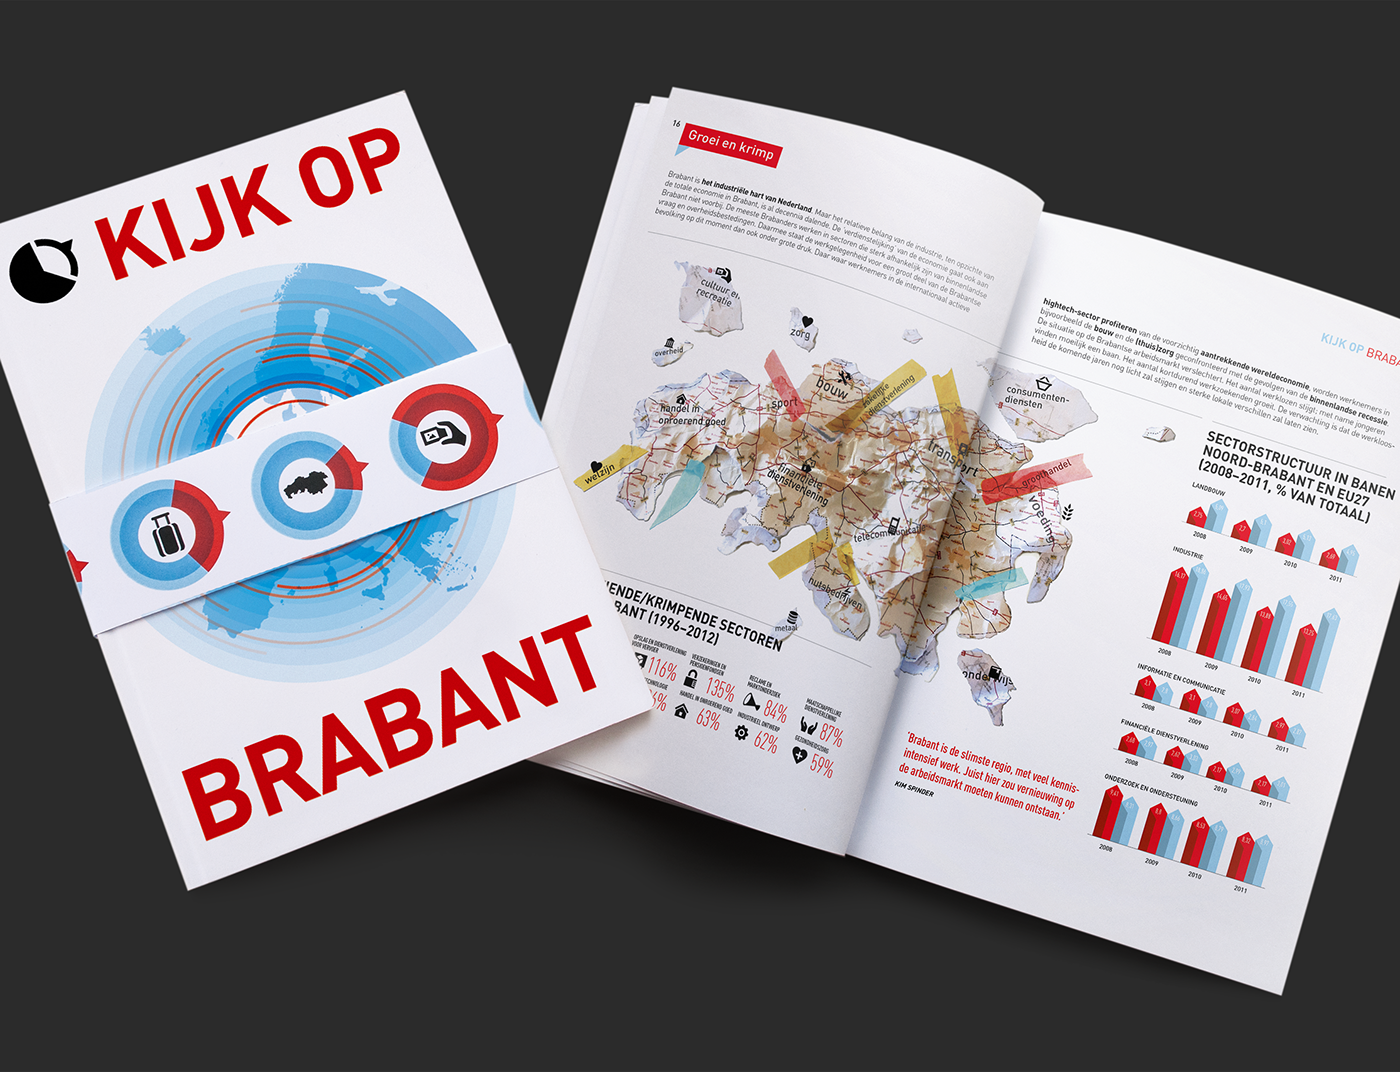 Kijk op Brabant BrabantKennis #Trenddag #BrabantKennis Total Public total active media Total Identity dutch infographics inspire